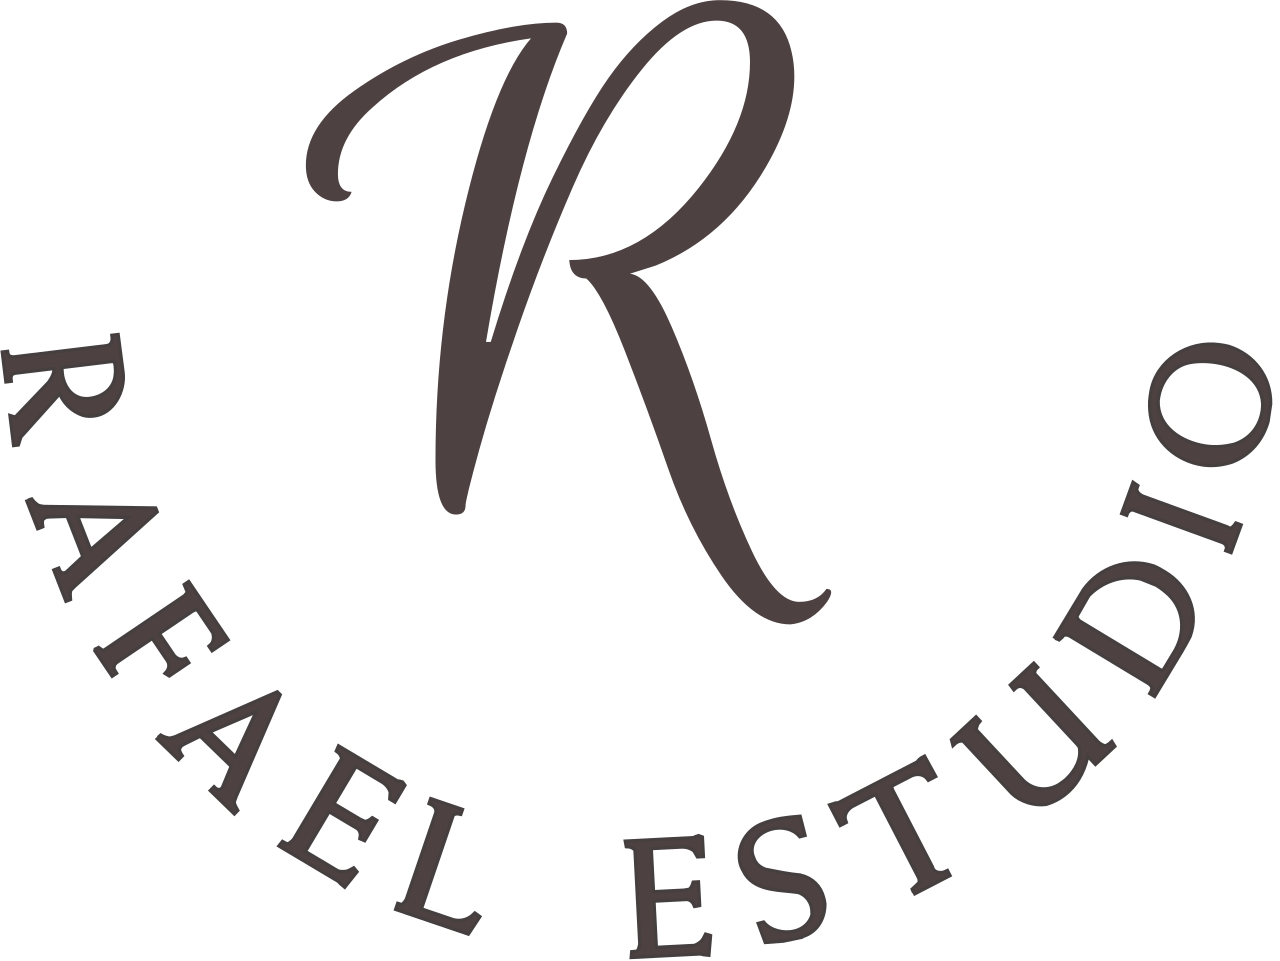 Rafael Estudio's logo